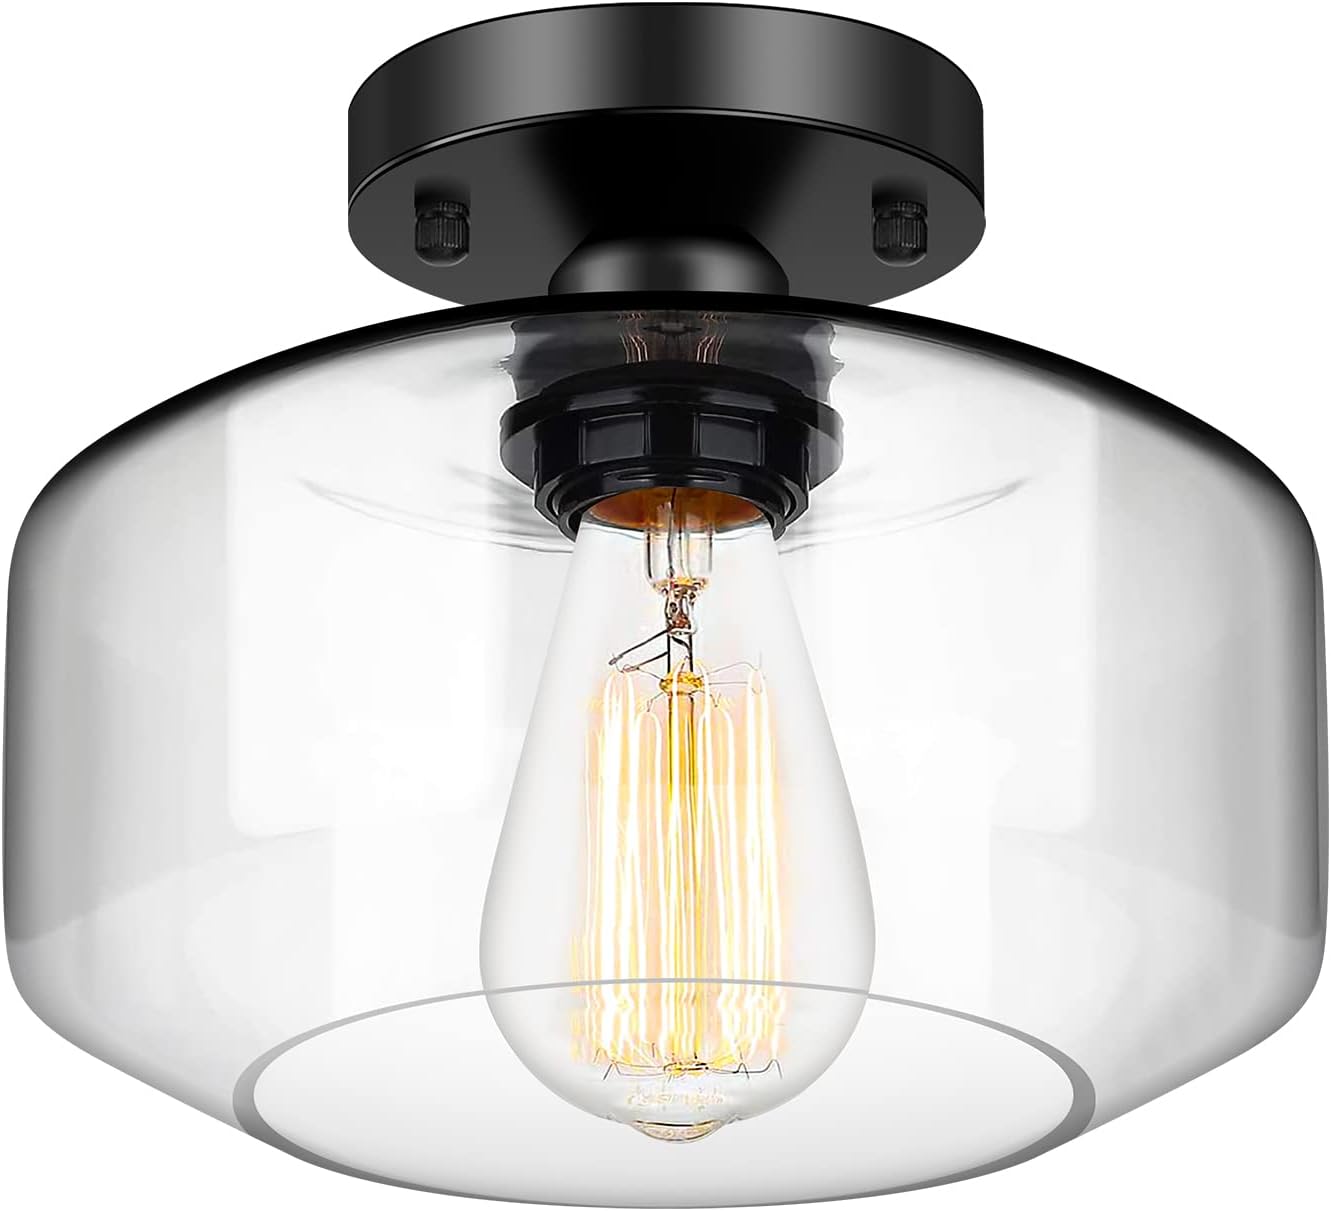 TOBUSA Industrial Semi Flush Mount Ceiling Light: A Stylish and Versatile Lighting Solution